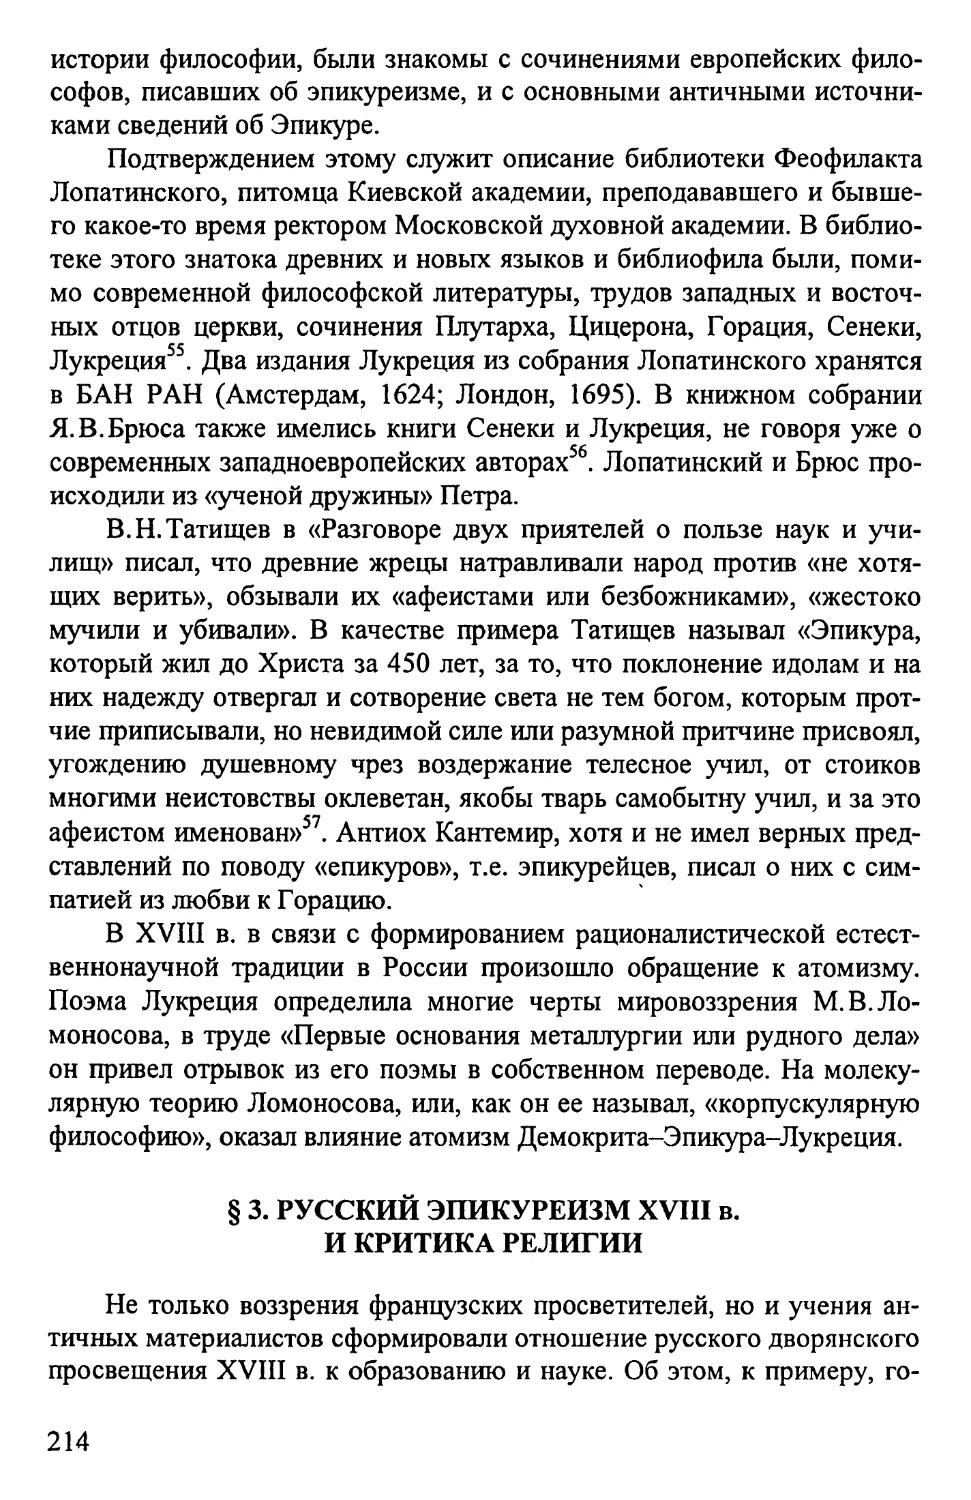 § 3. Русский эпикуреизм XVIII в. и критика религии